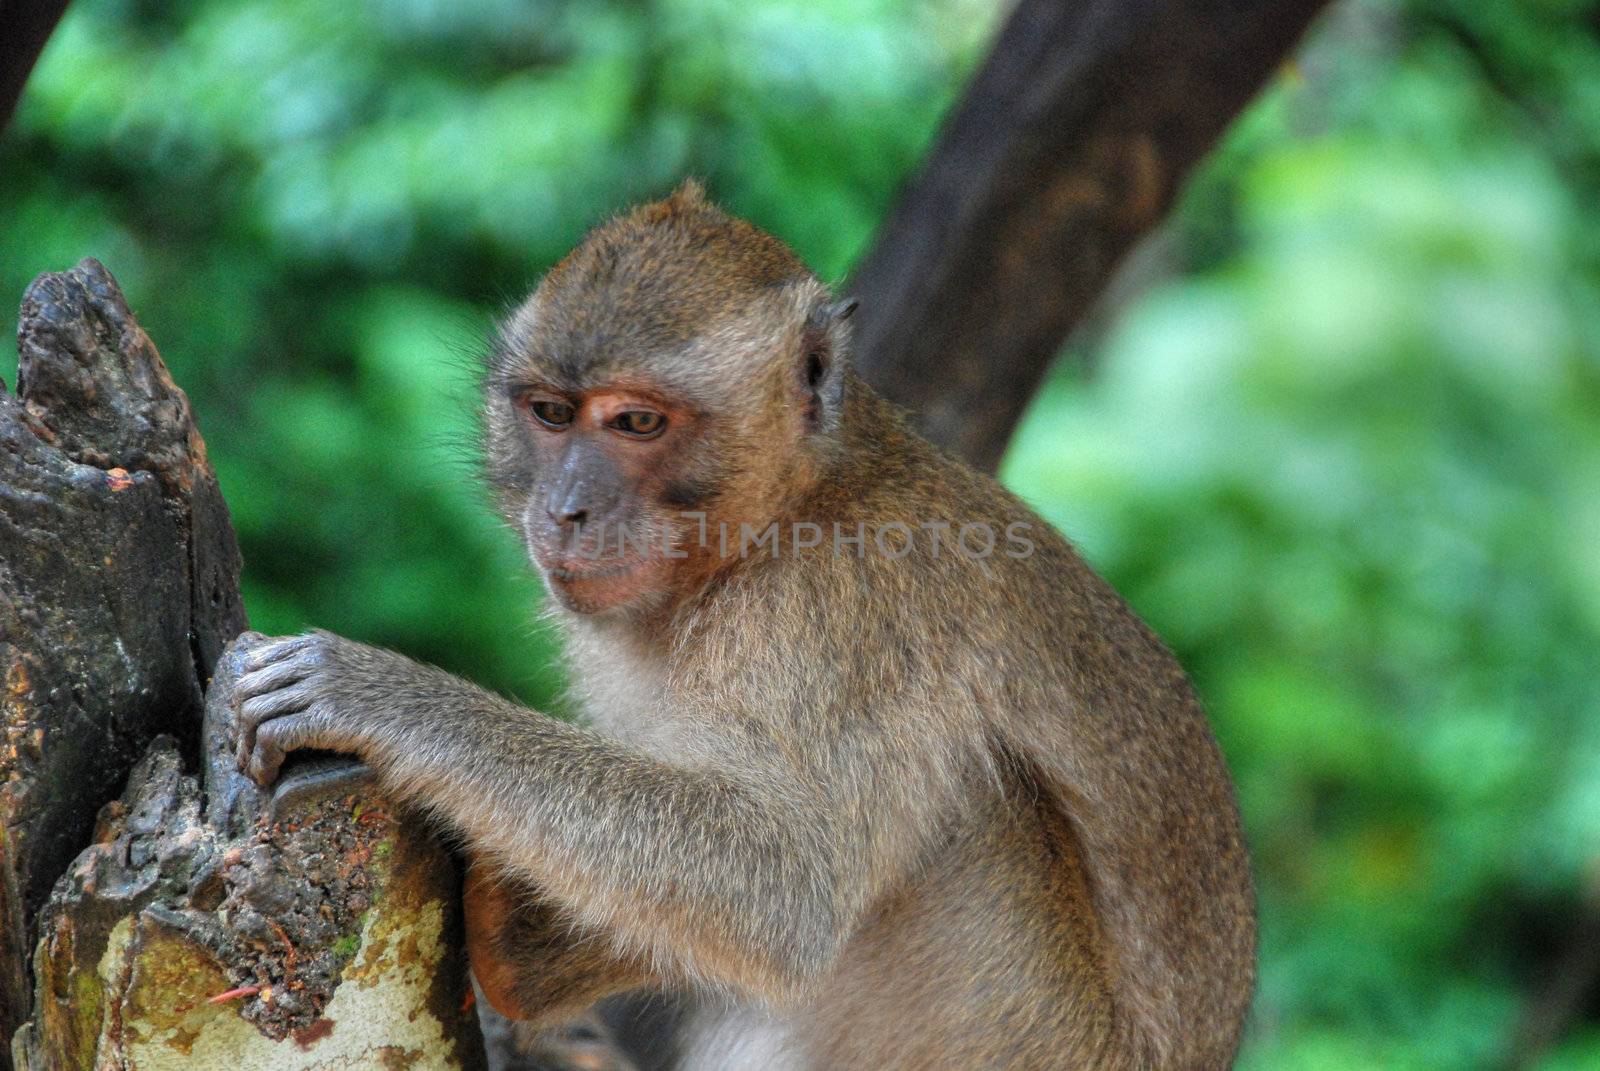 Thinking Monkey, Changmai, Thailand, August 2007 by jovannig